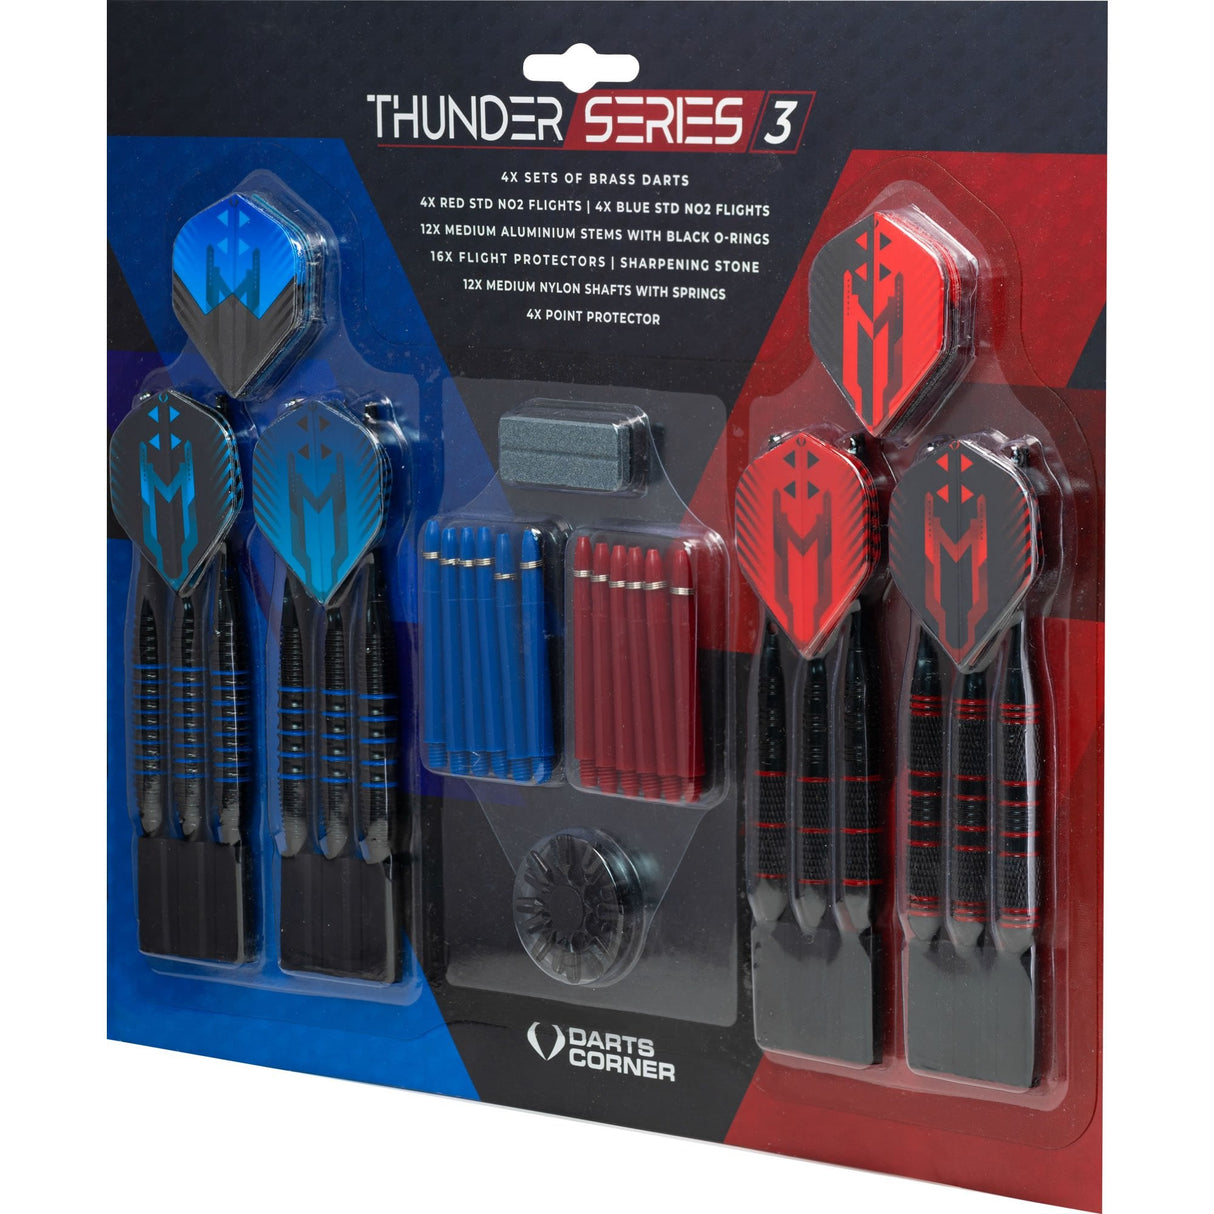 Darts Corner - Thunder Series 3 - Steel Tip Brass - 4 Sets Darts - Blue & Red - 21g 22g 23g 24g 23g